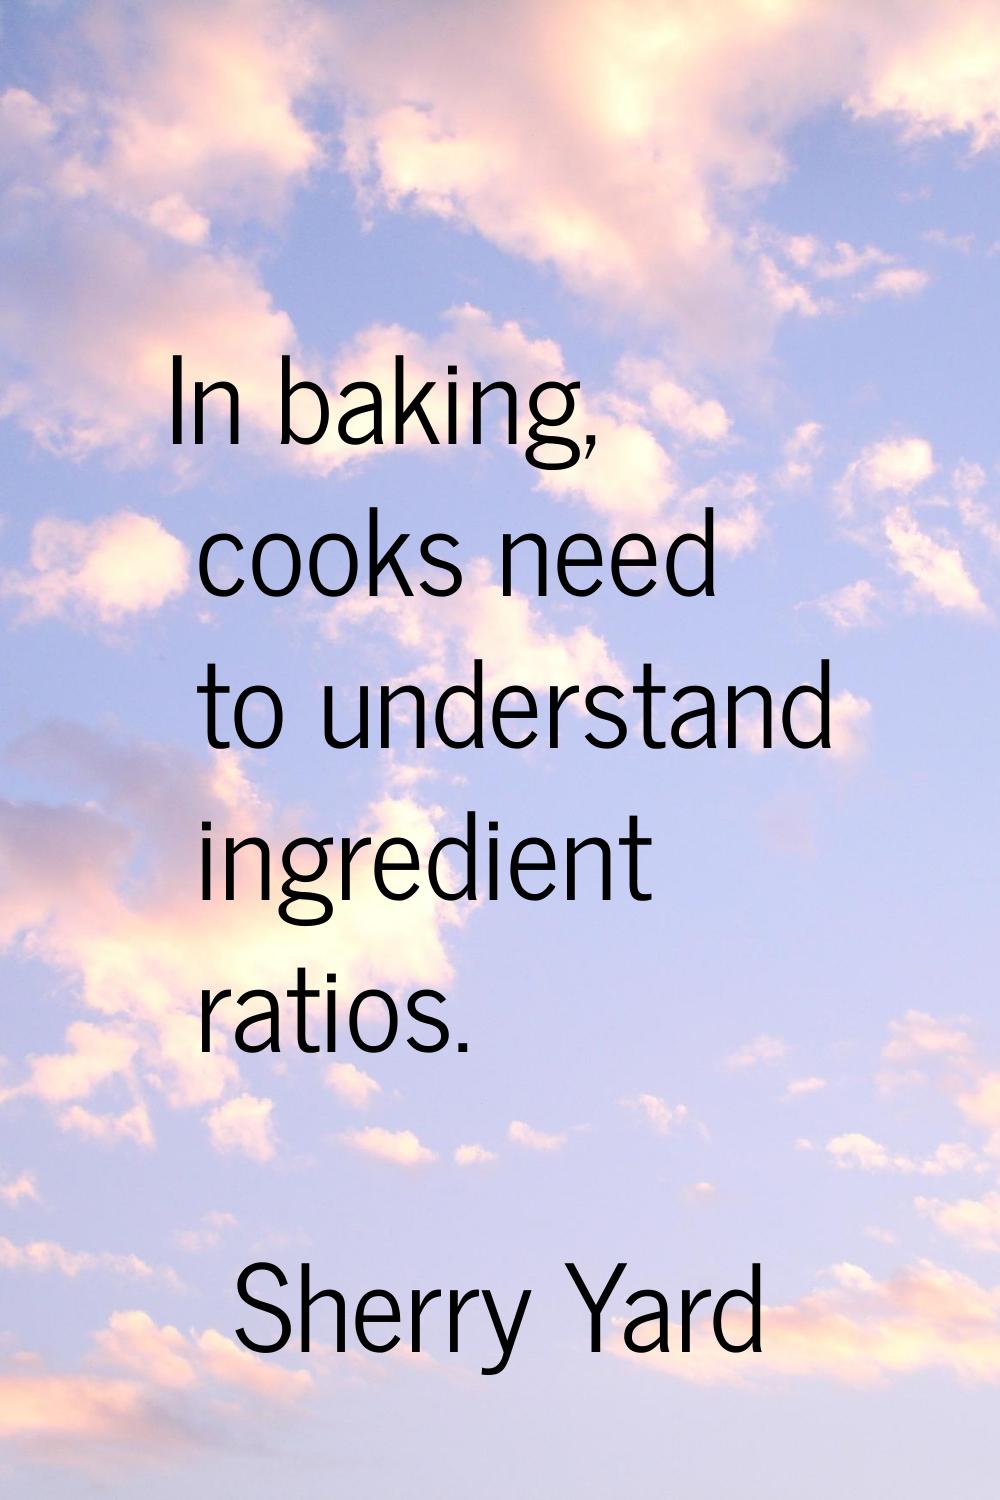 In baking, cooks need to understand ingredient ratios.